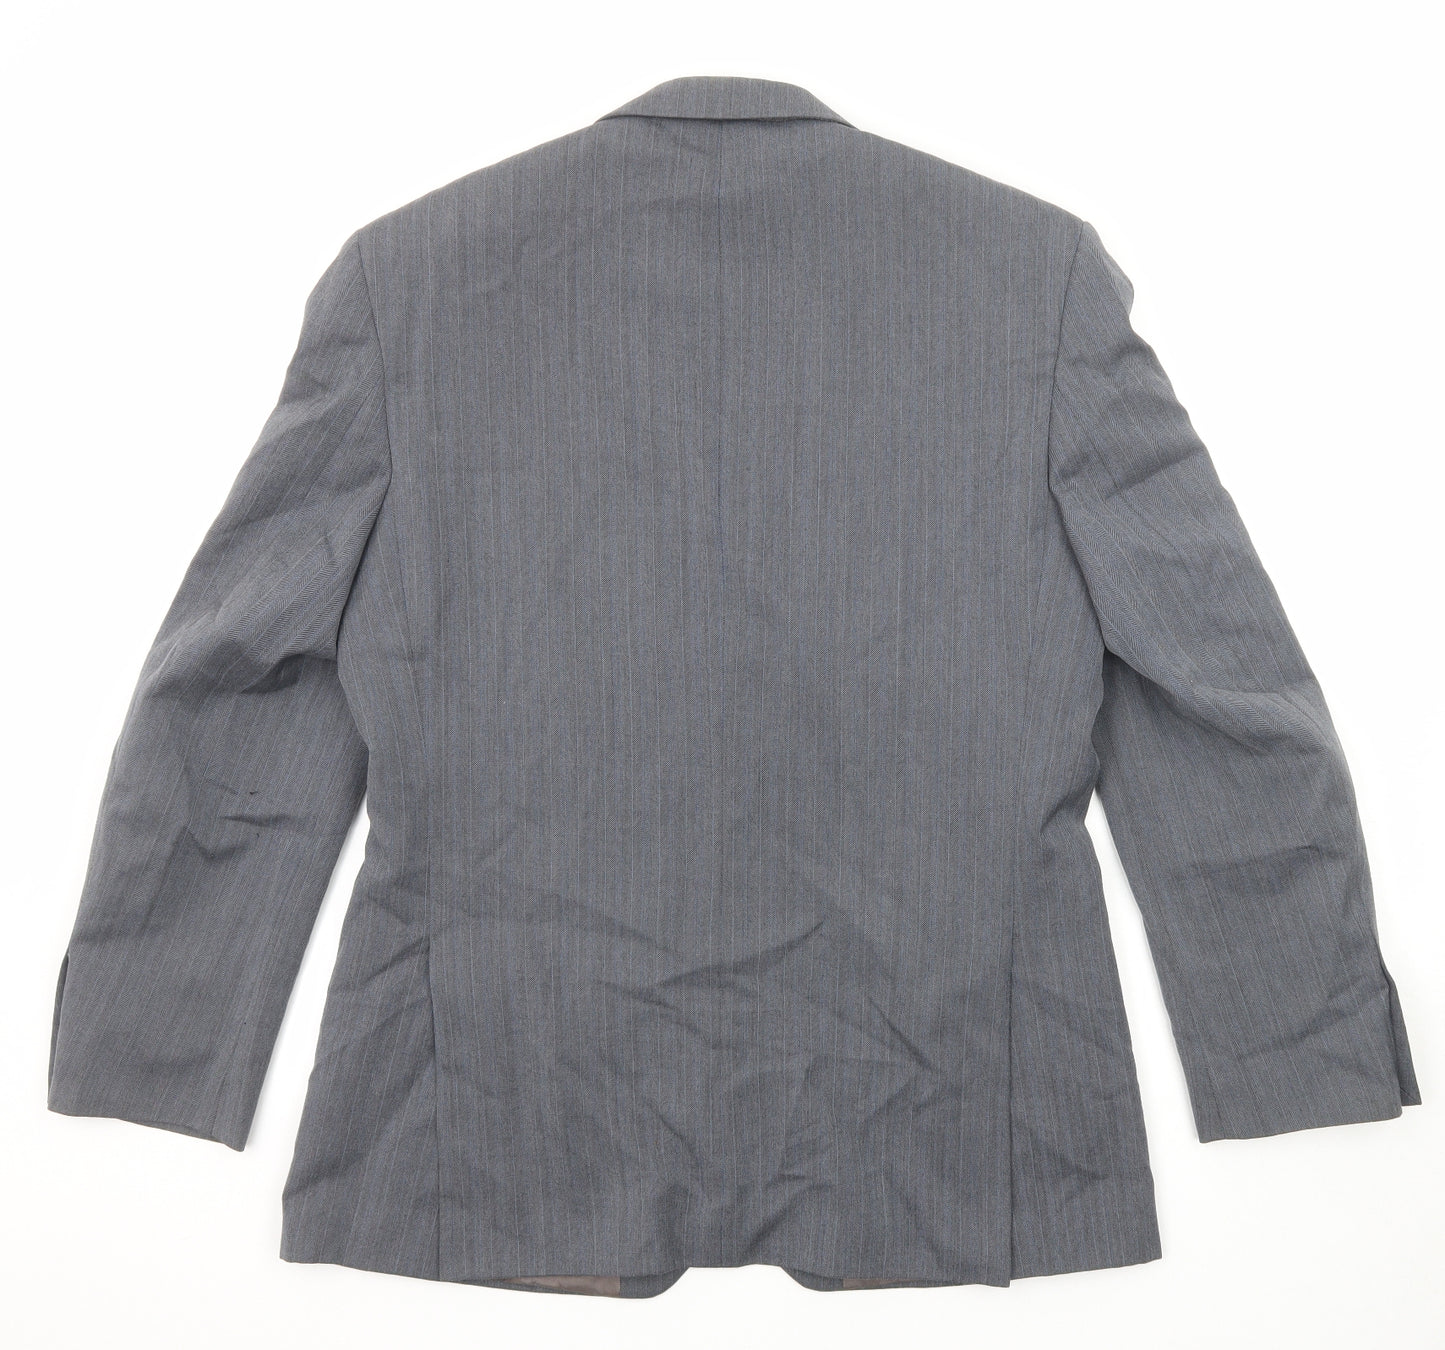 Chatsworth Mens Grey Striped Wool Jacket Suit Jacket Size 40 Regular